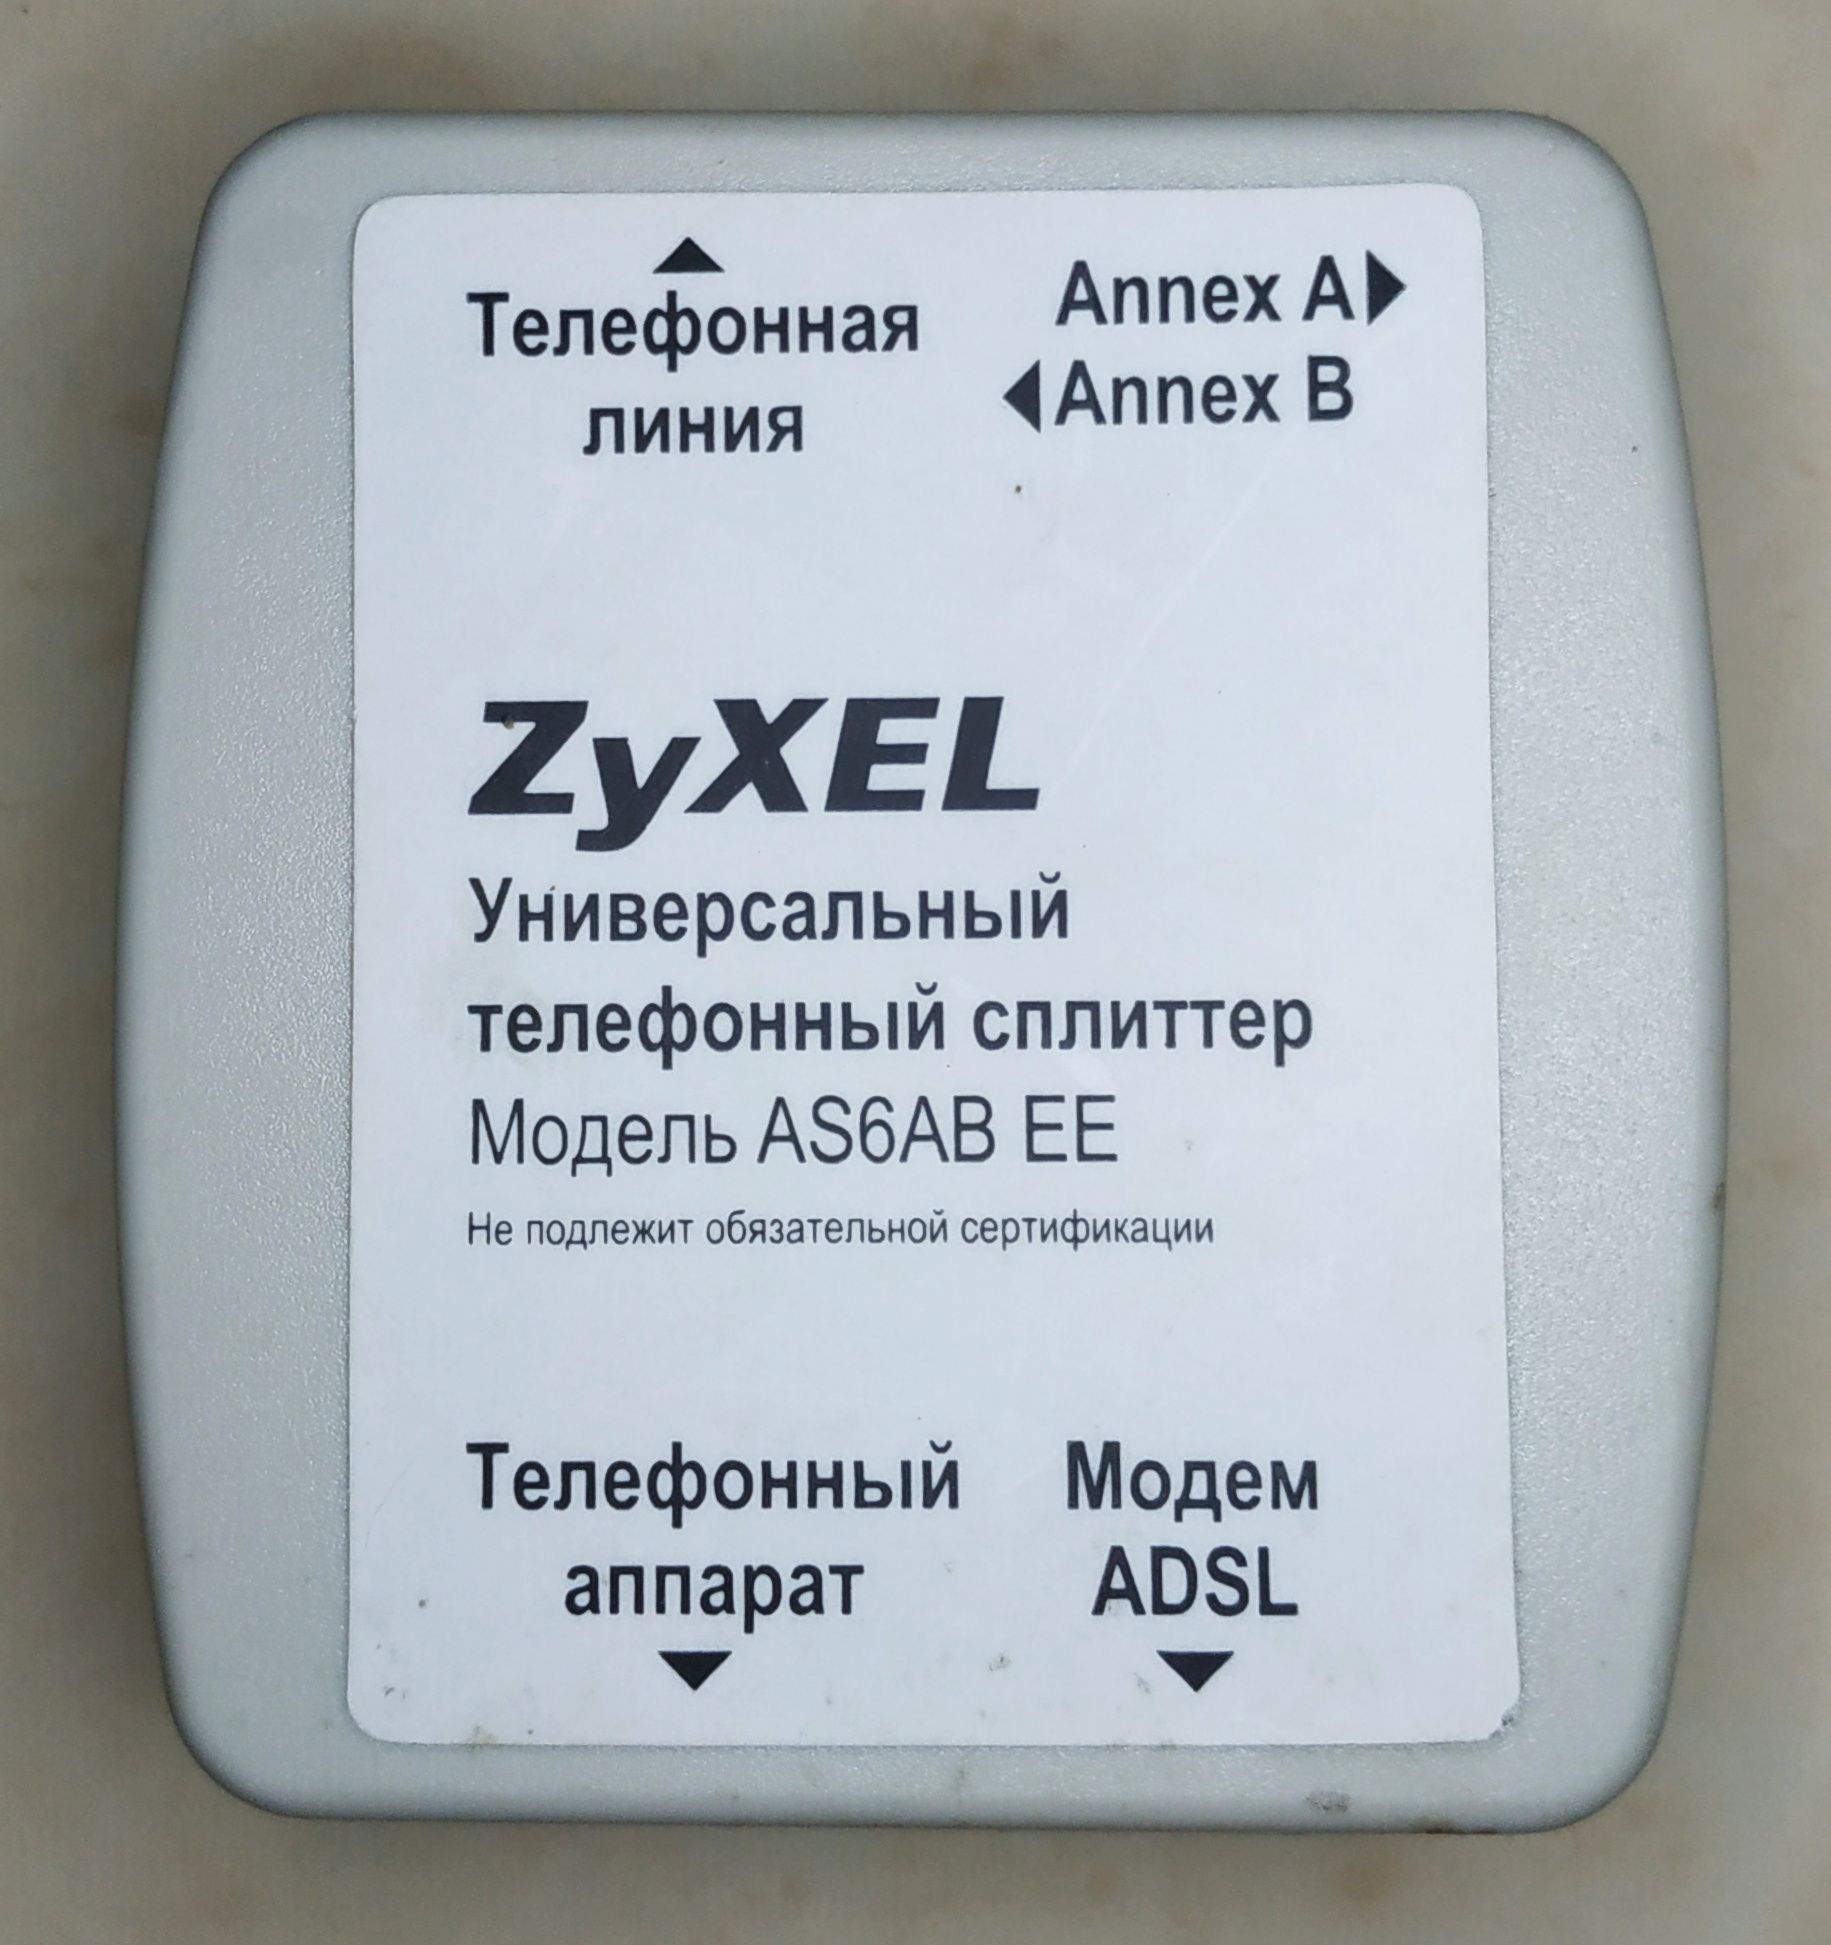 ПРОДАМ Модем adsl Zyxel P-660R EE ADSL2+ ПОДАРОК. Звоните.